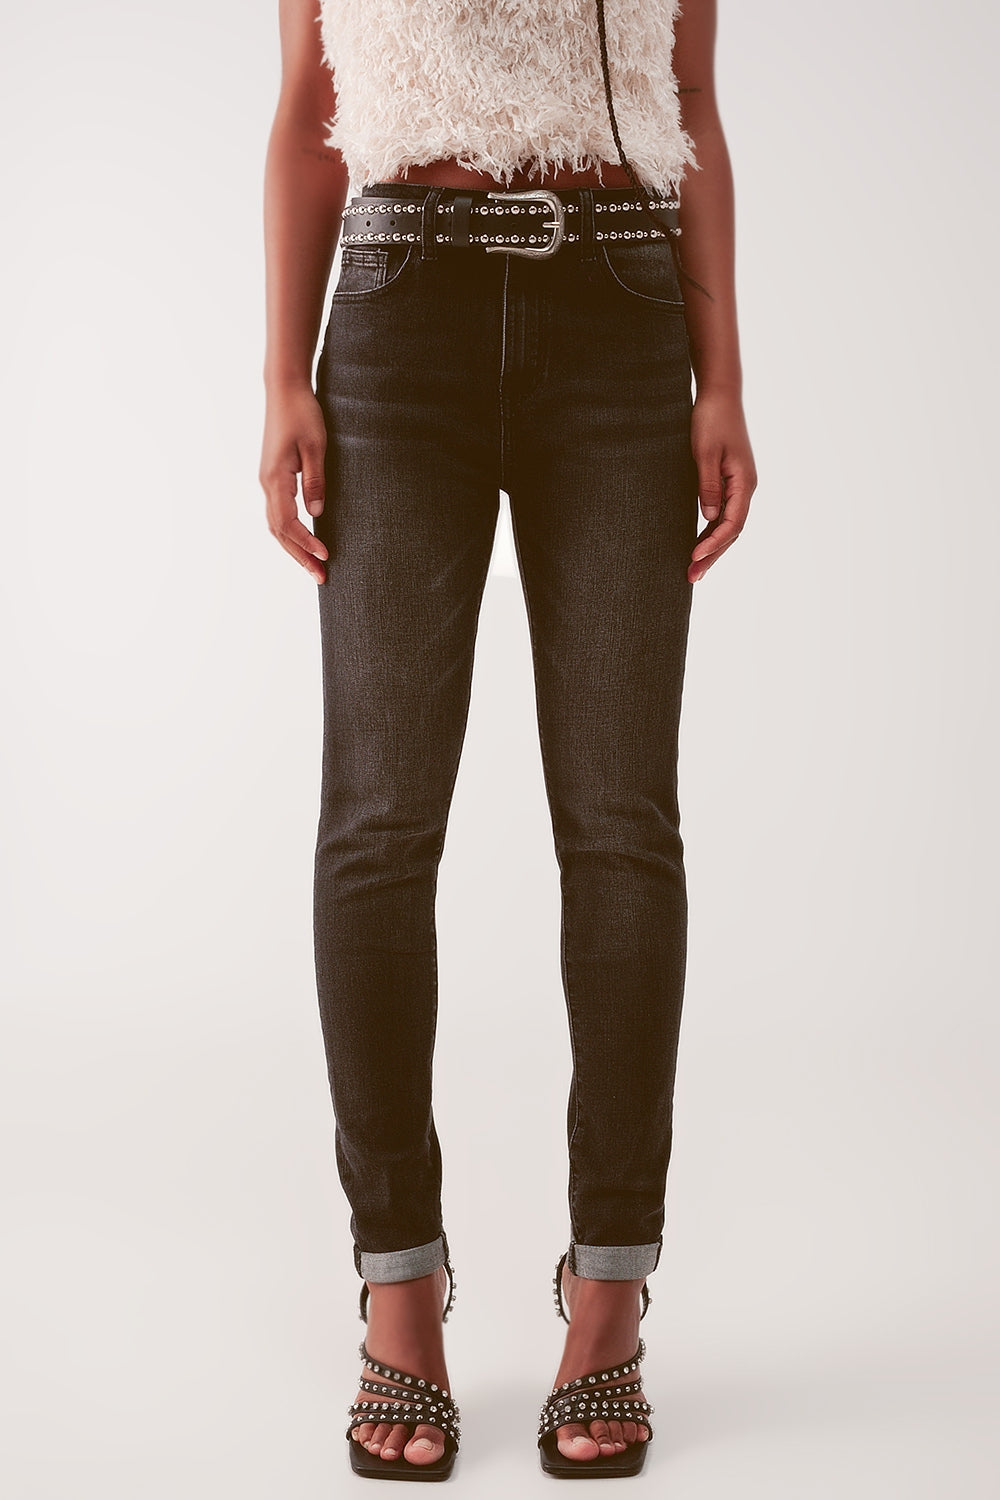 Q2 Jeans skinny a vita molto alta nero slavato